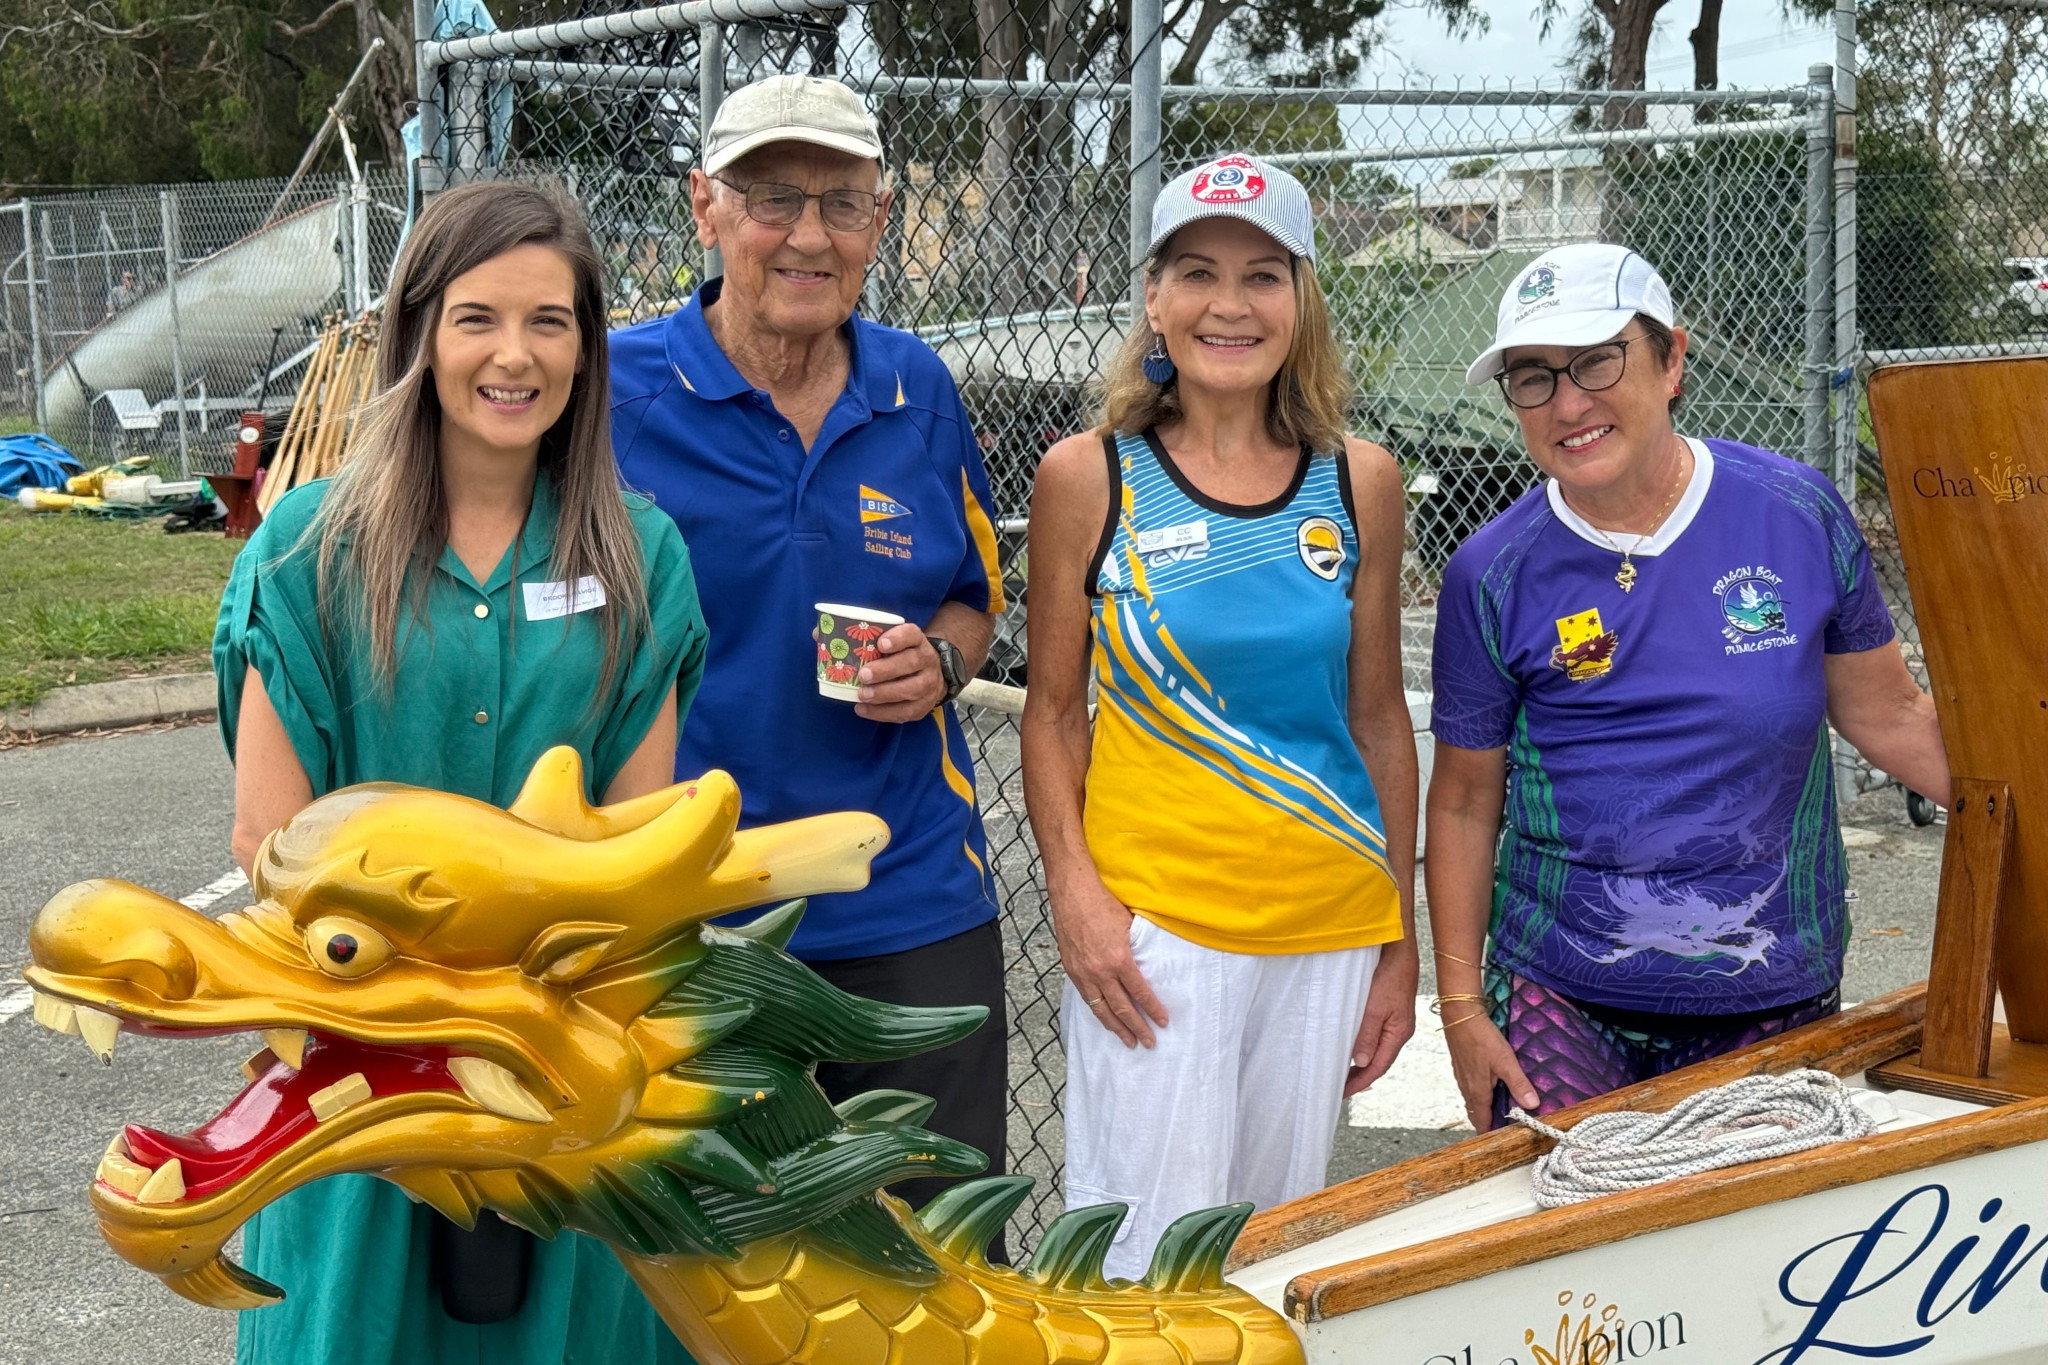 Brooke Savige, Jim Hawke, Cecilia Wilson and Michelle Hanton at the Dragon Boat Pumicestone club’s recent birthday event.